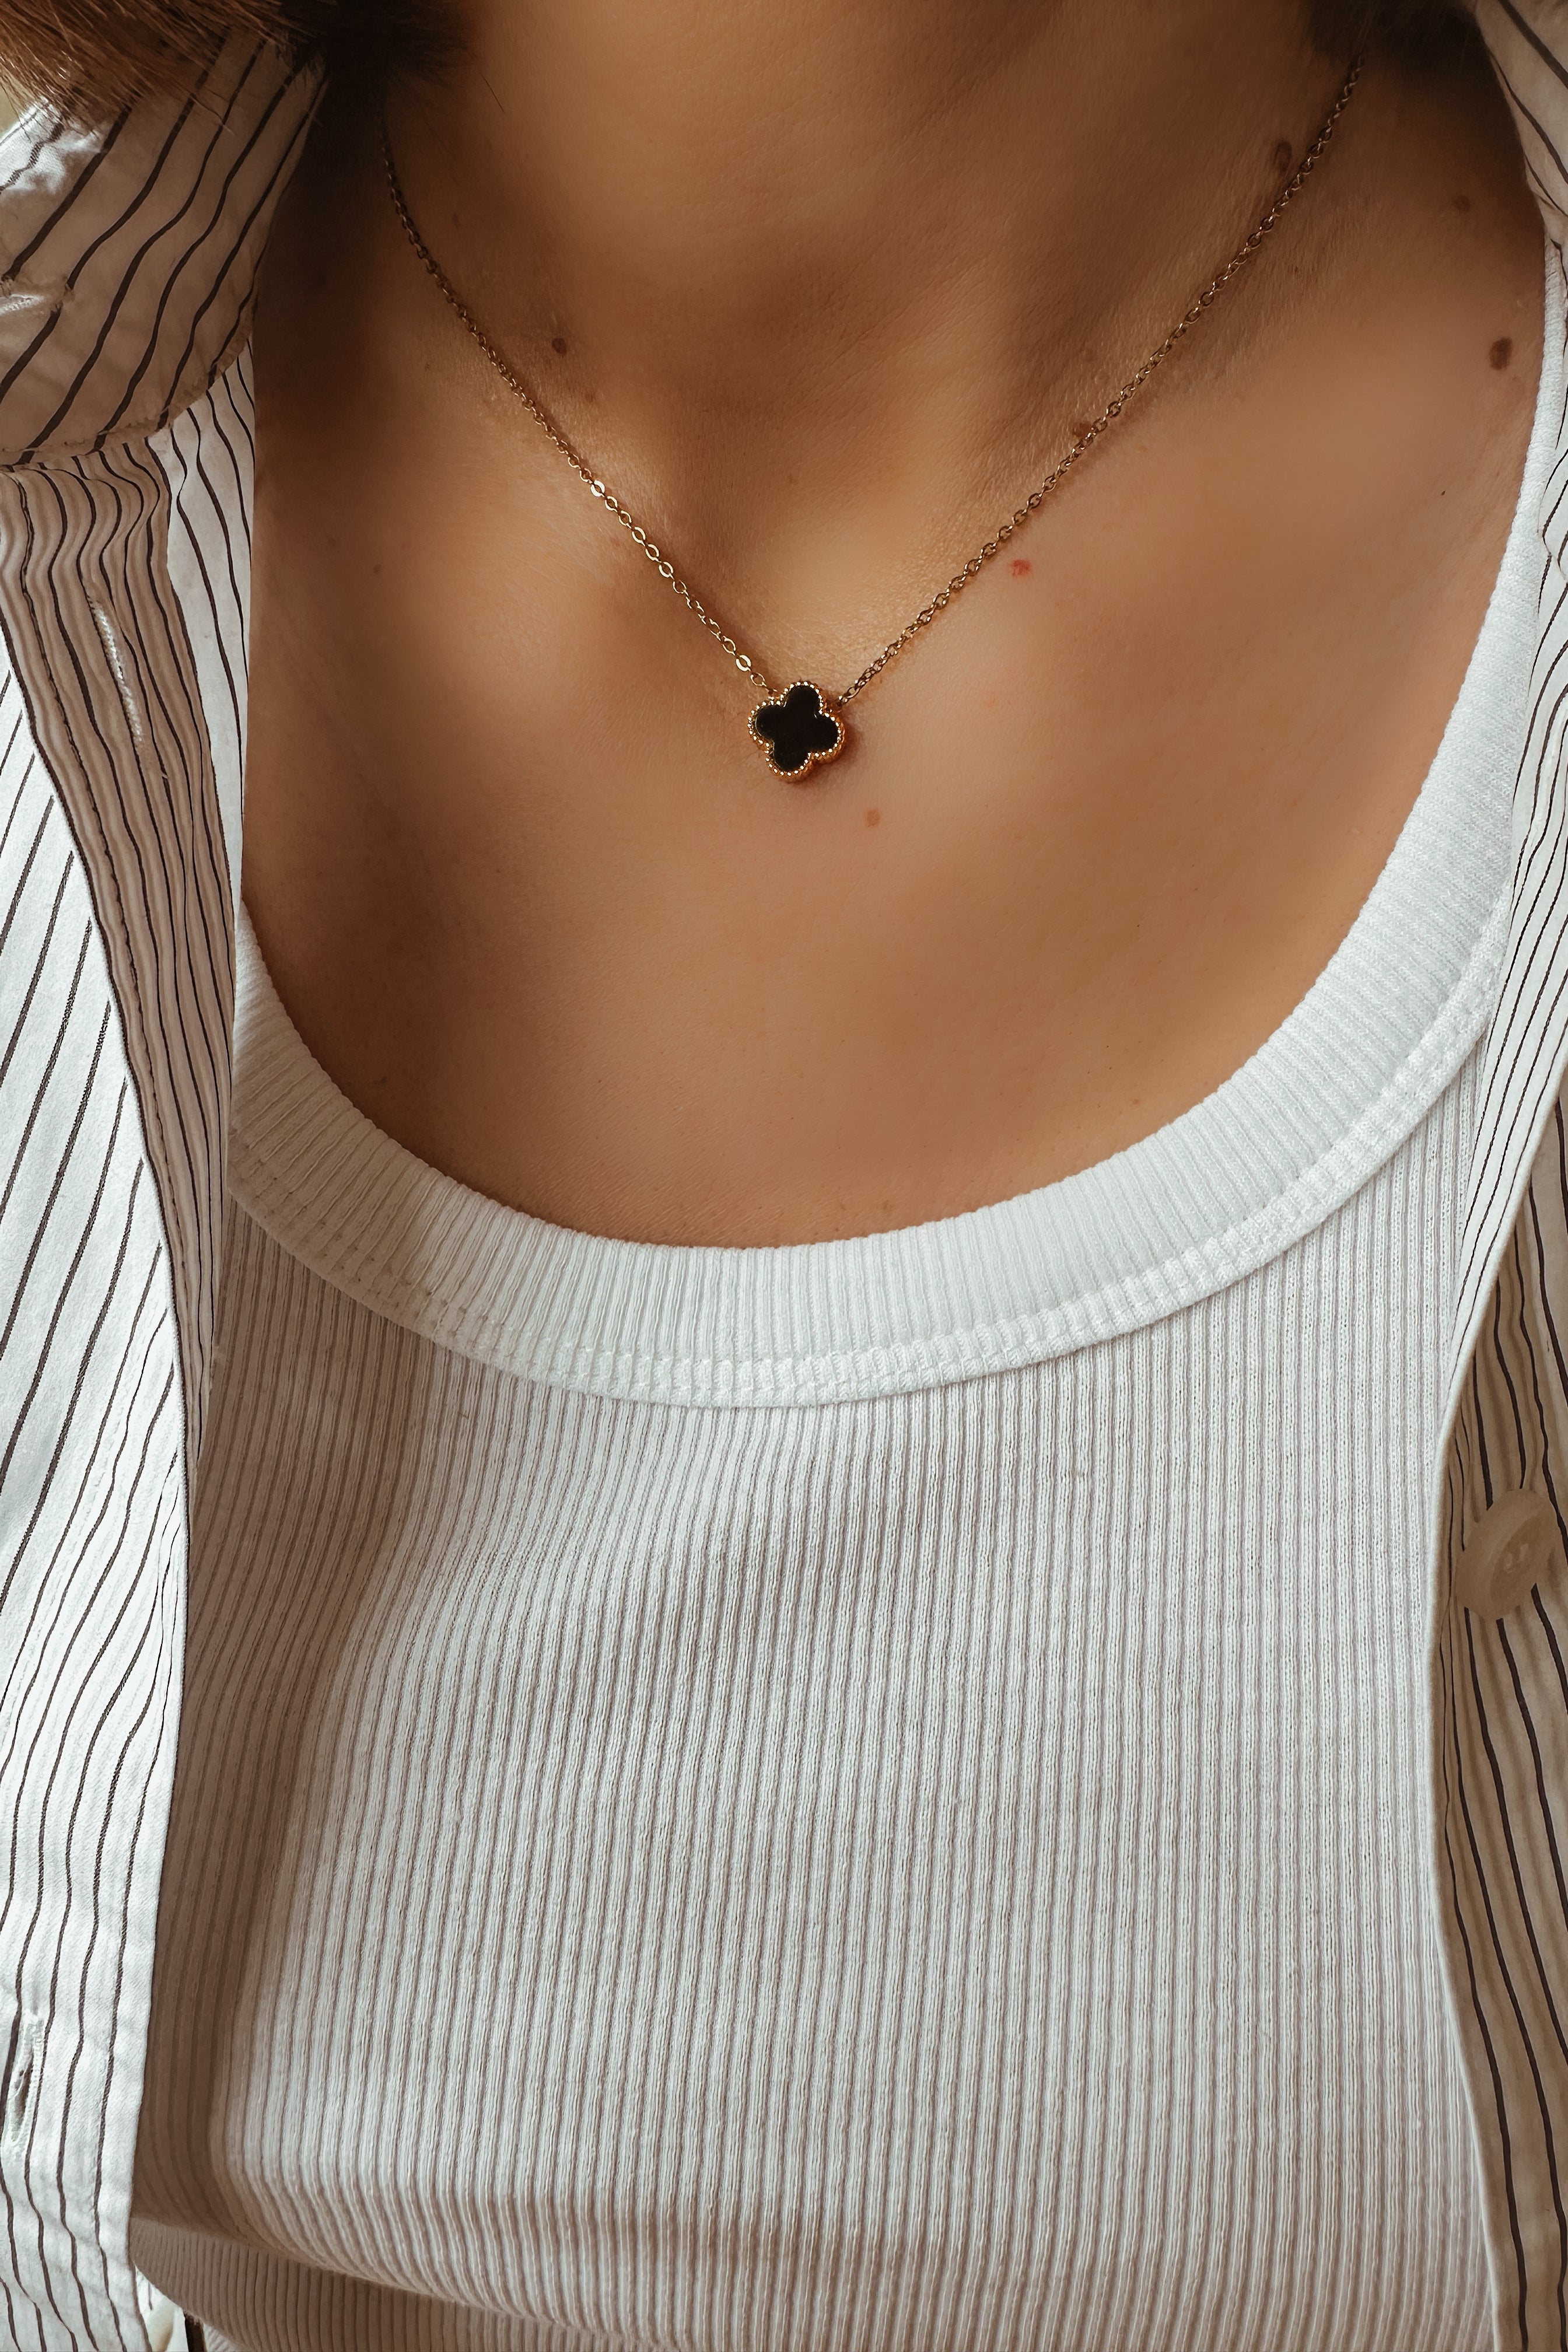 Black Enamel Clover Necklace